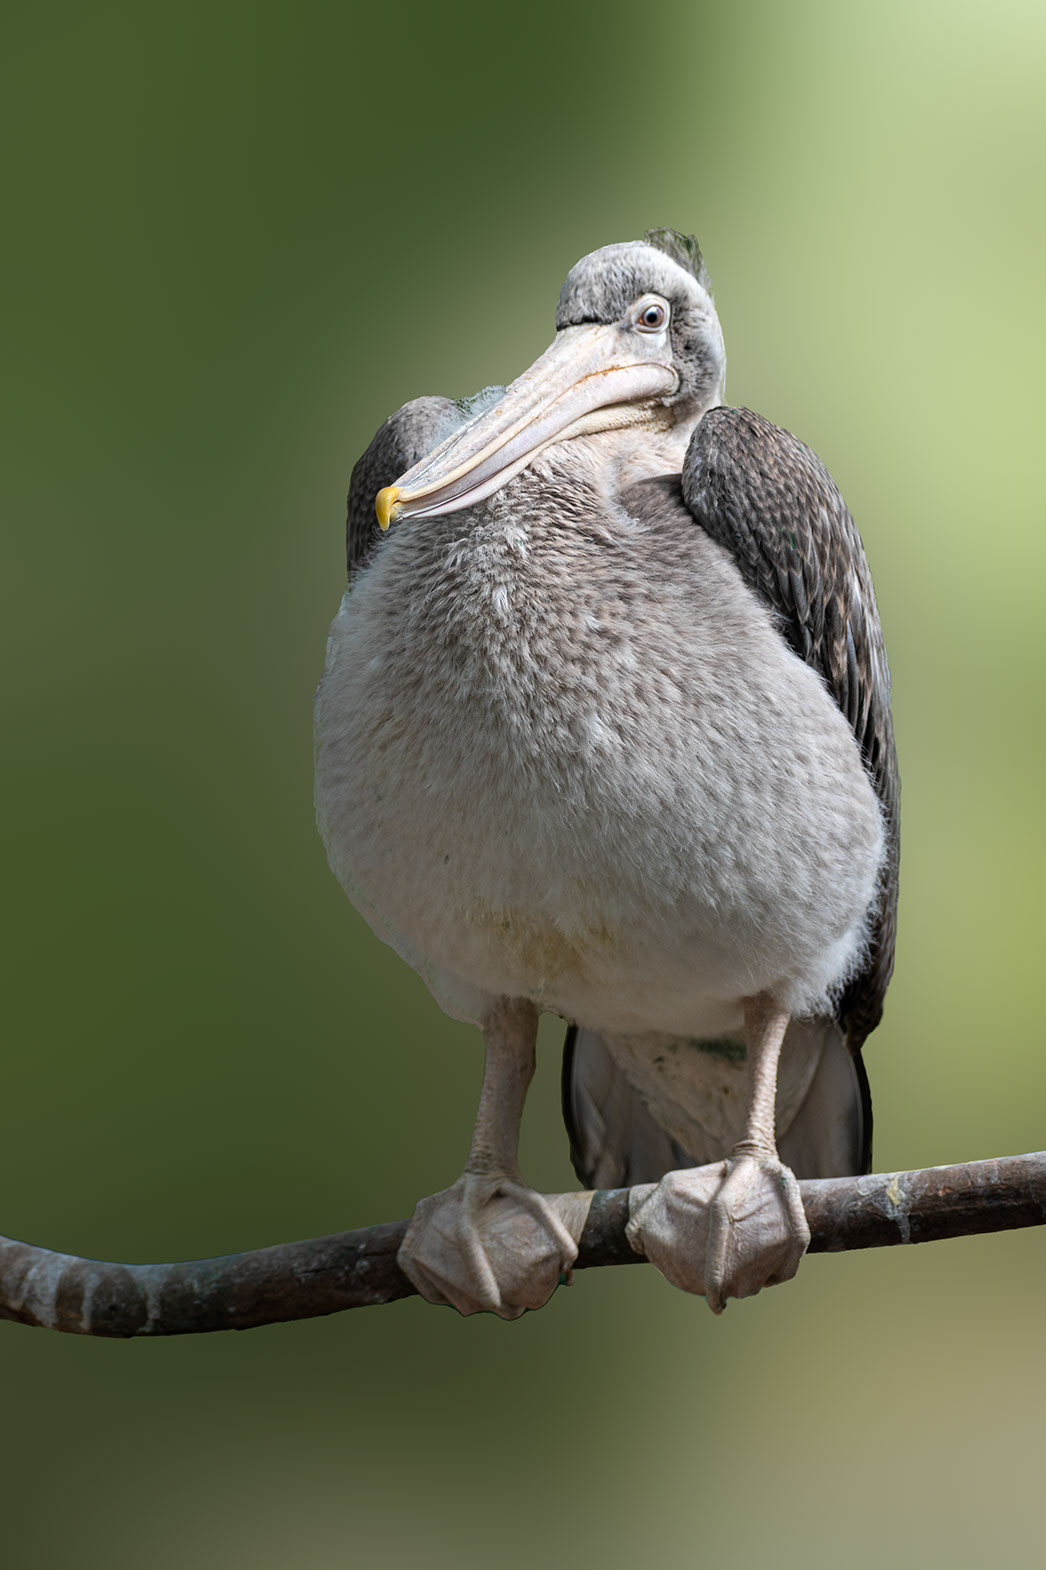 A spot-billed pelicans rests on a perch in Kokkarebellur